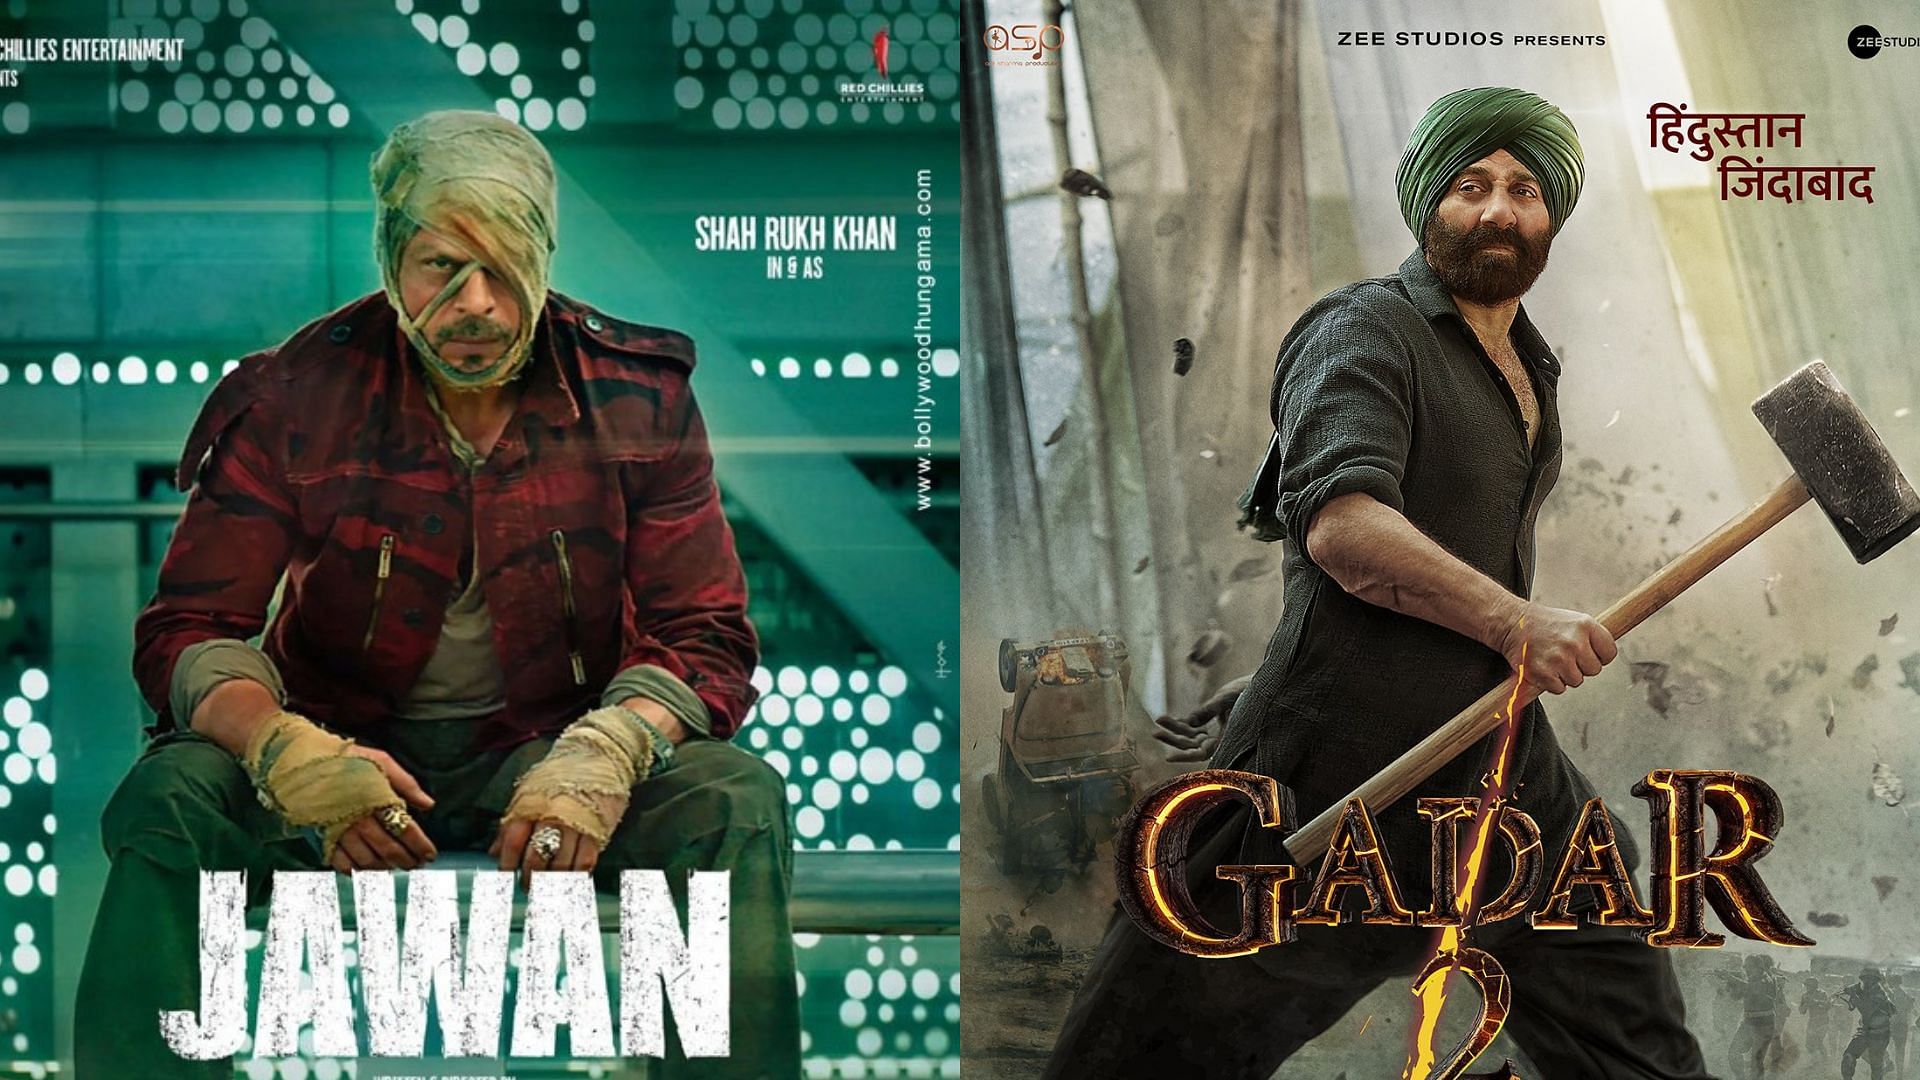 <div class="paragraphs"><p>SRK’s 'Jawan' Becomes Highest Grossing Hindi Film in India, Surpasses 'Gadar 2'</p></div>